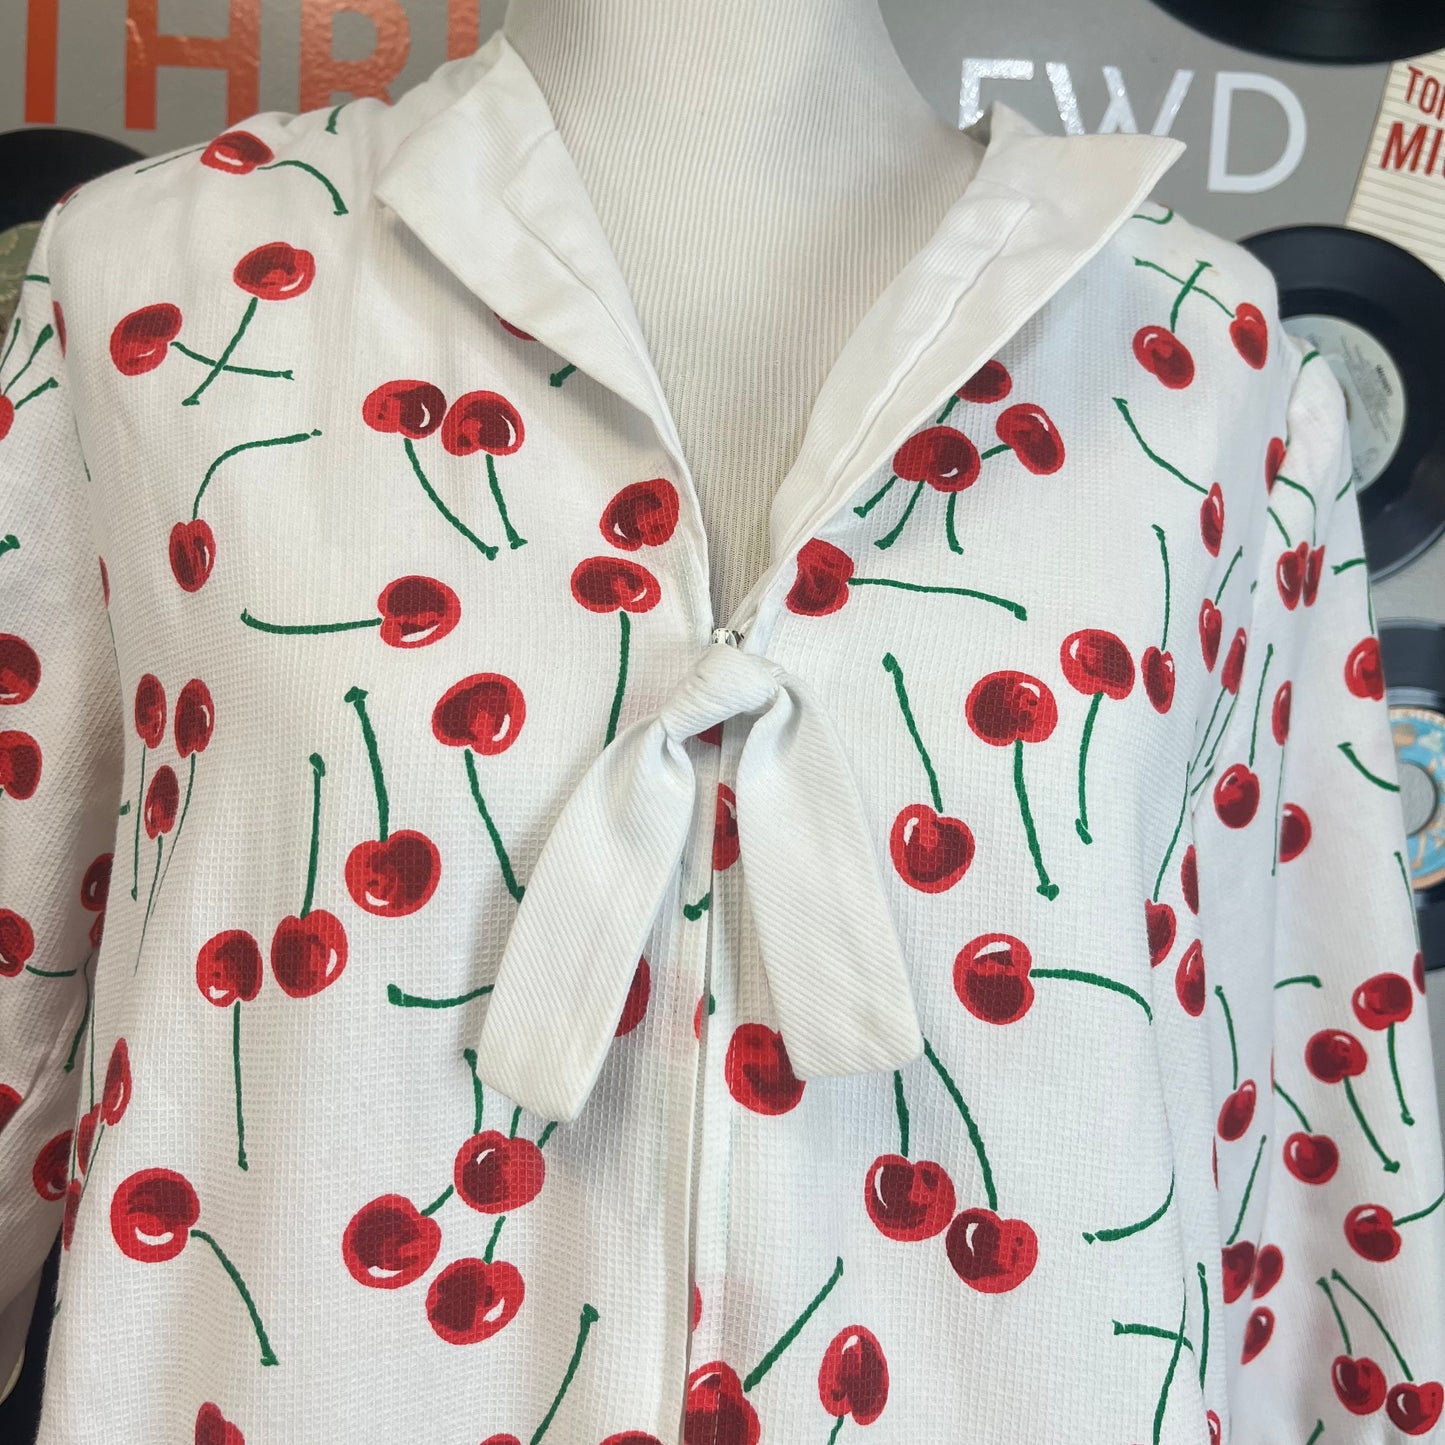 Vintage Flo Weinberg ORIGINAL Zip Robe House Dress Muumuu Cherries Size L